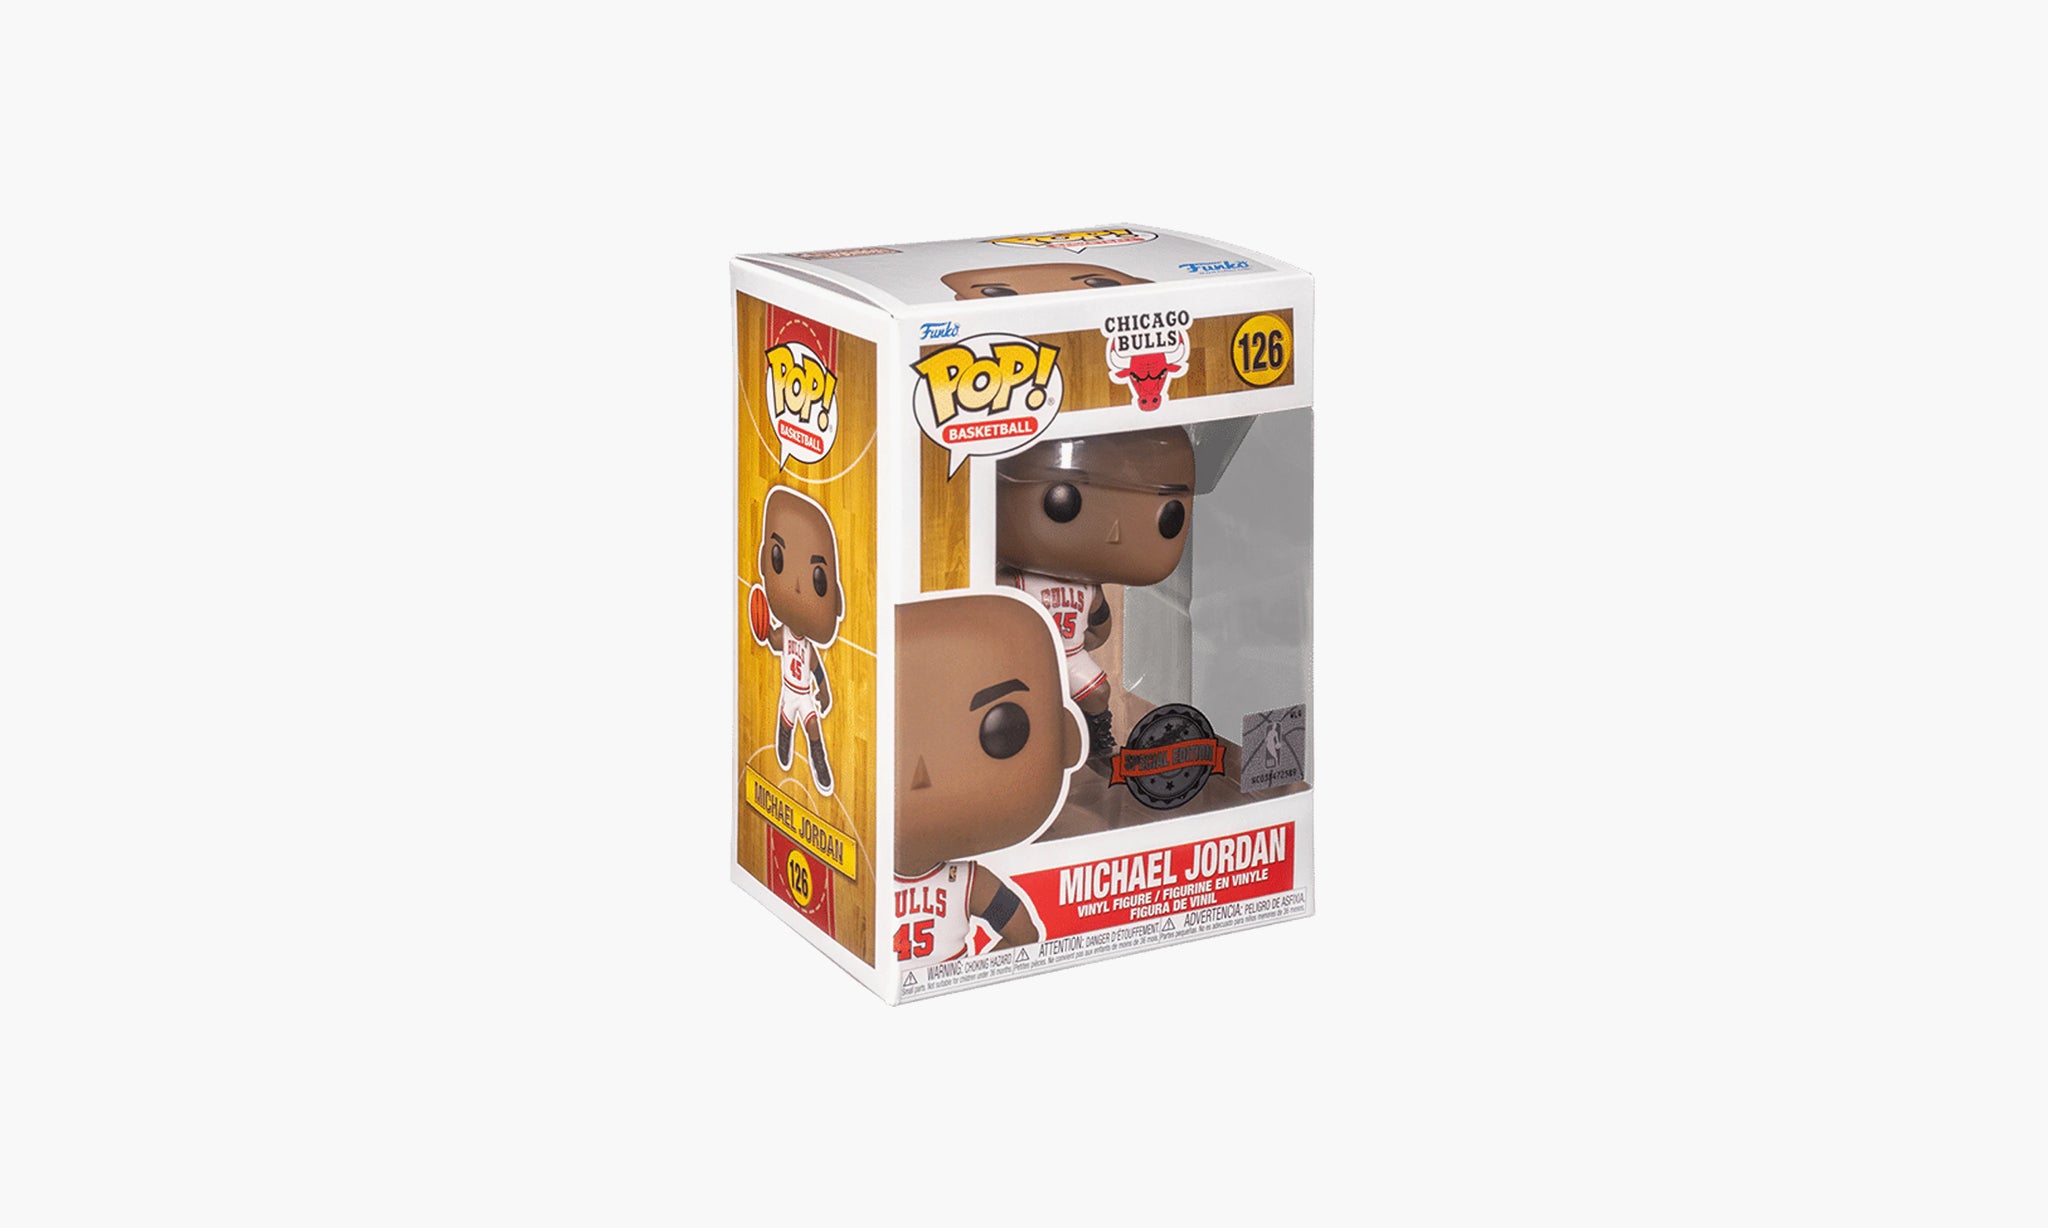 Michael Jordan Chicago Bulls Funko POP Exclusive Figurine